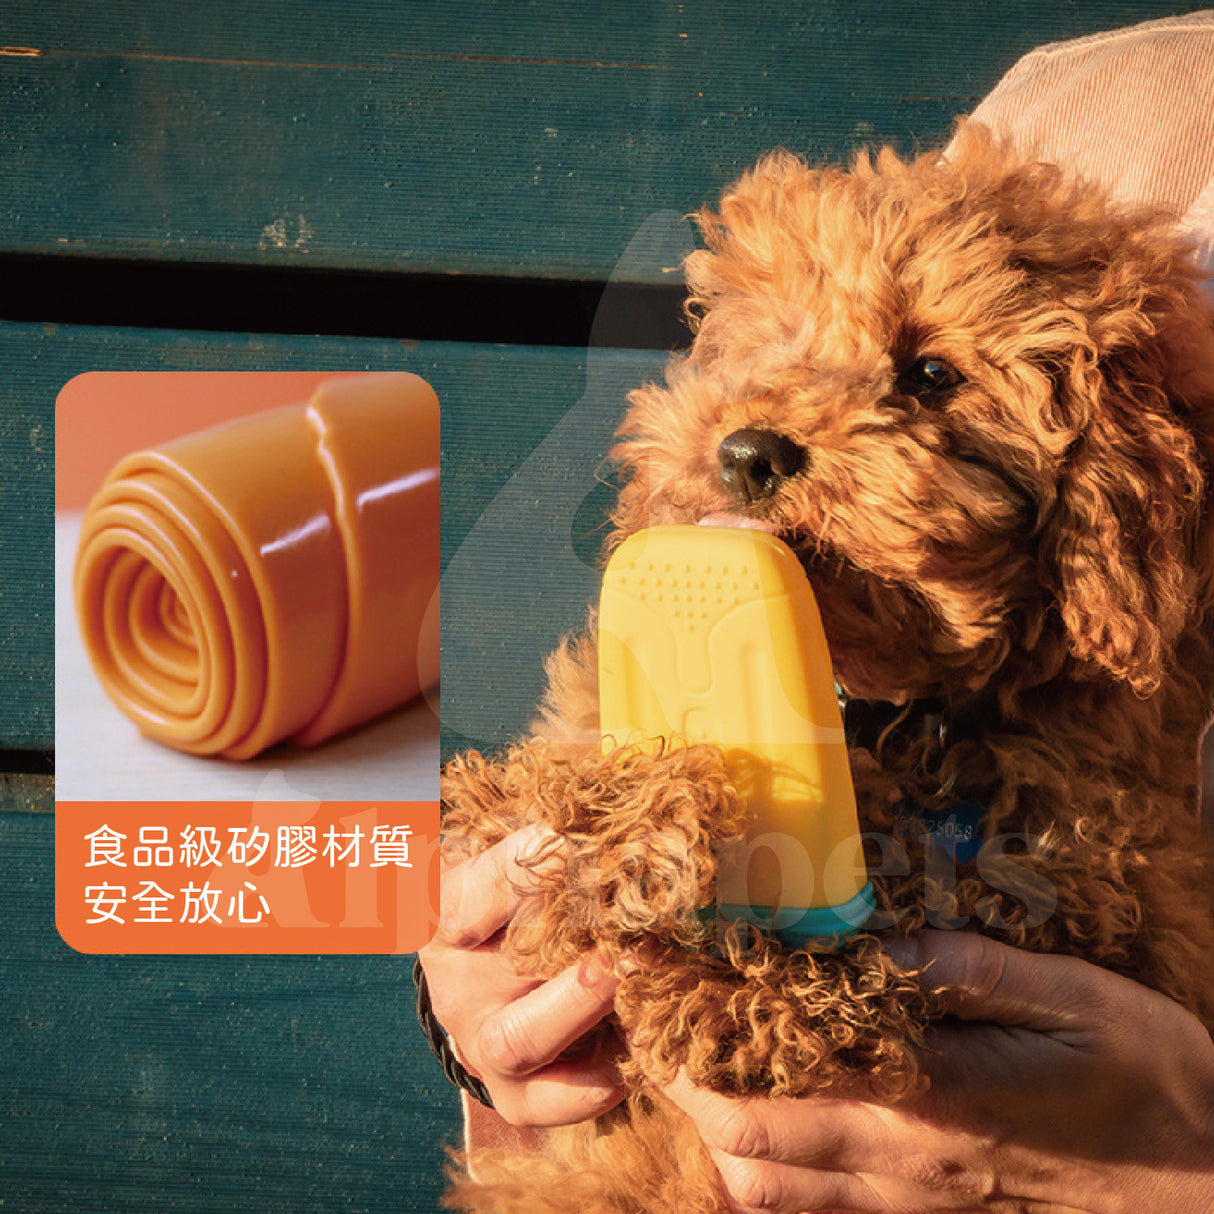 LaRoo萊諾 冰凍冰淇淋 降暑玩具 橡膠玩具 狗狗玩具